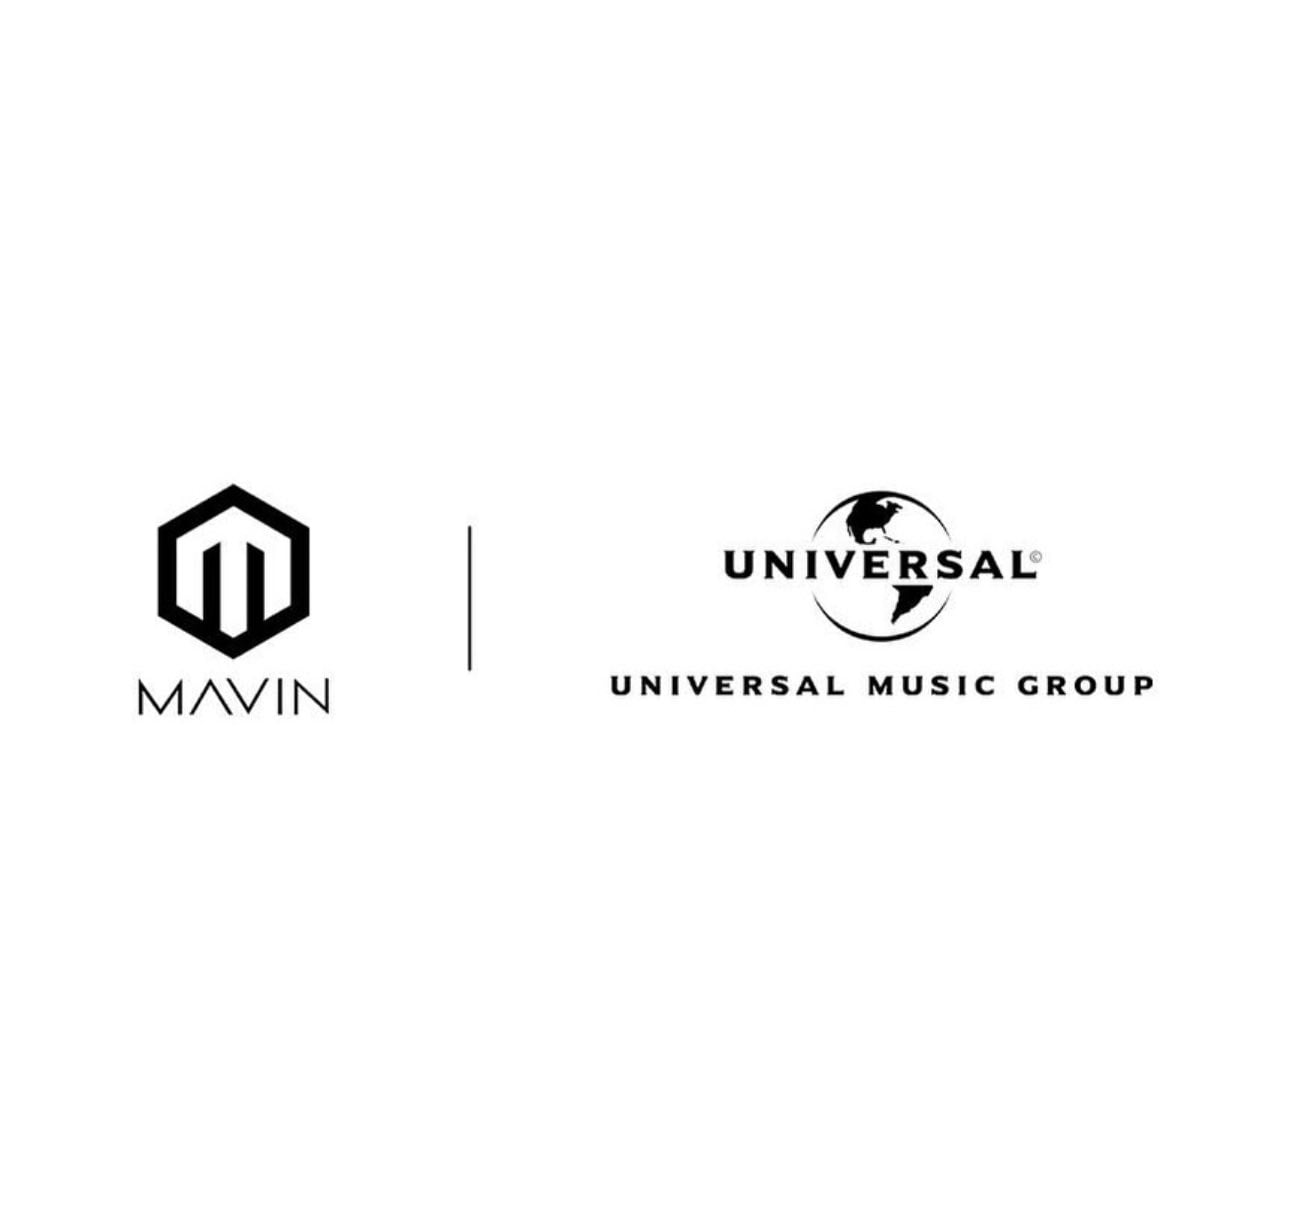 mavin universal music group